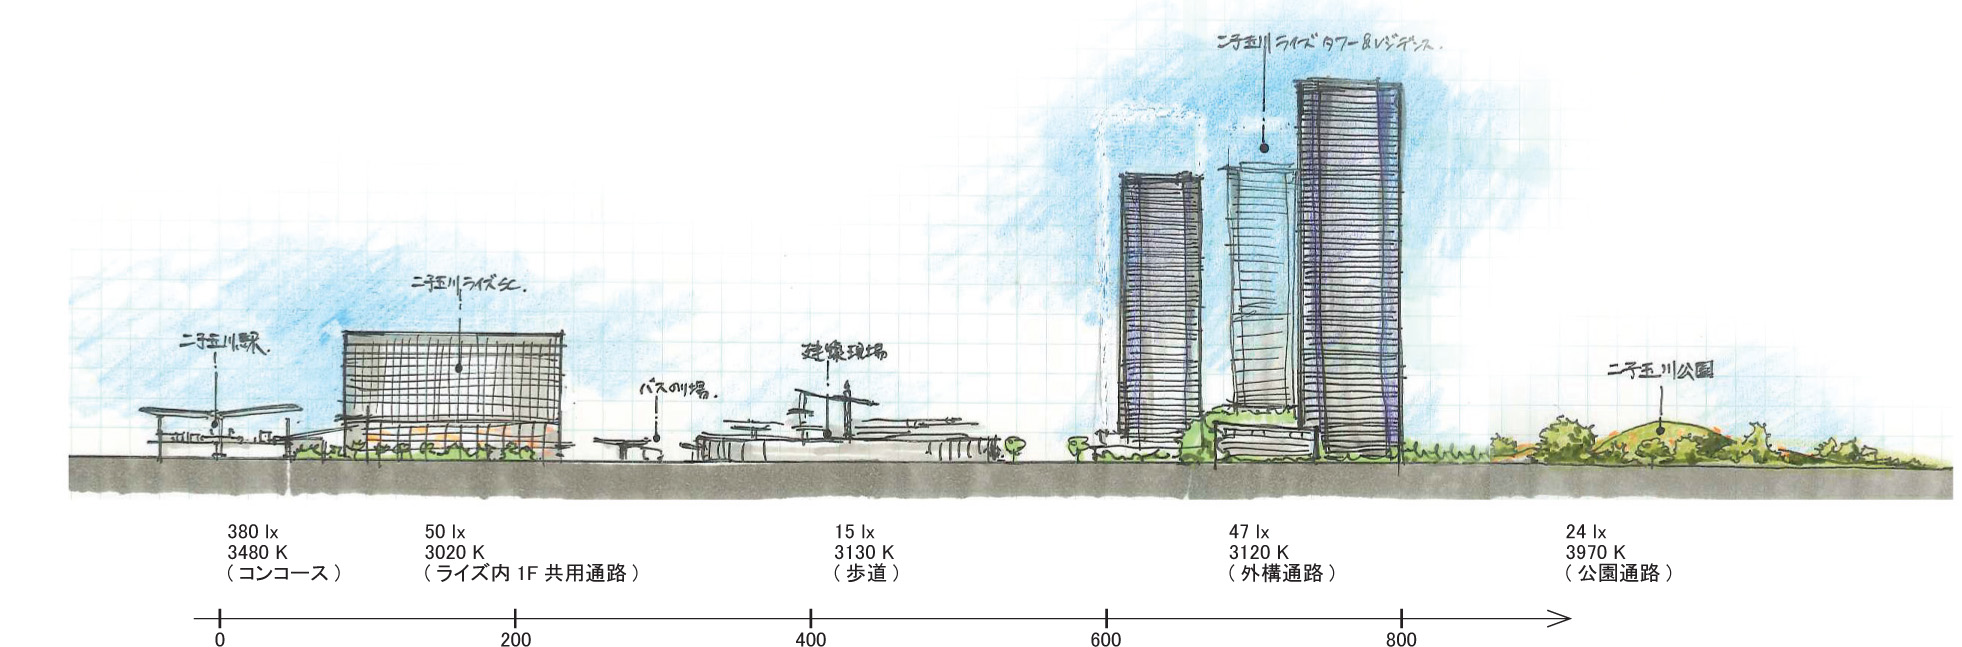 Futago-tamagawa - Sketch & Notes for Futago-tamagawa City section